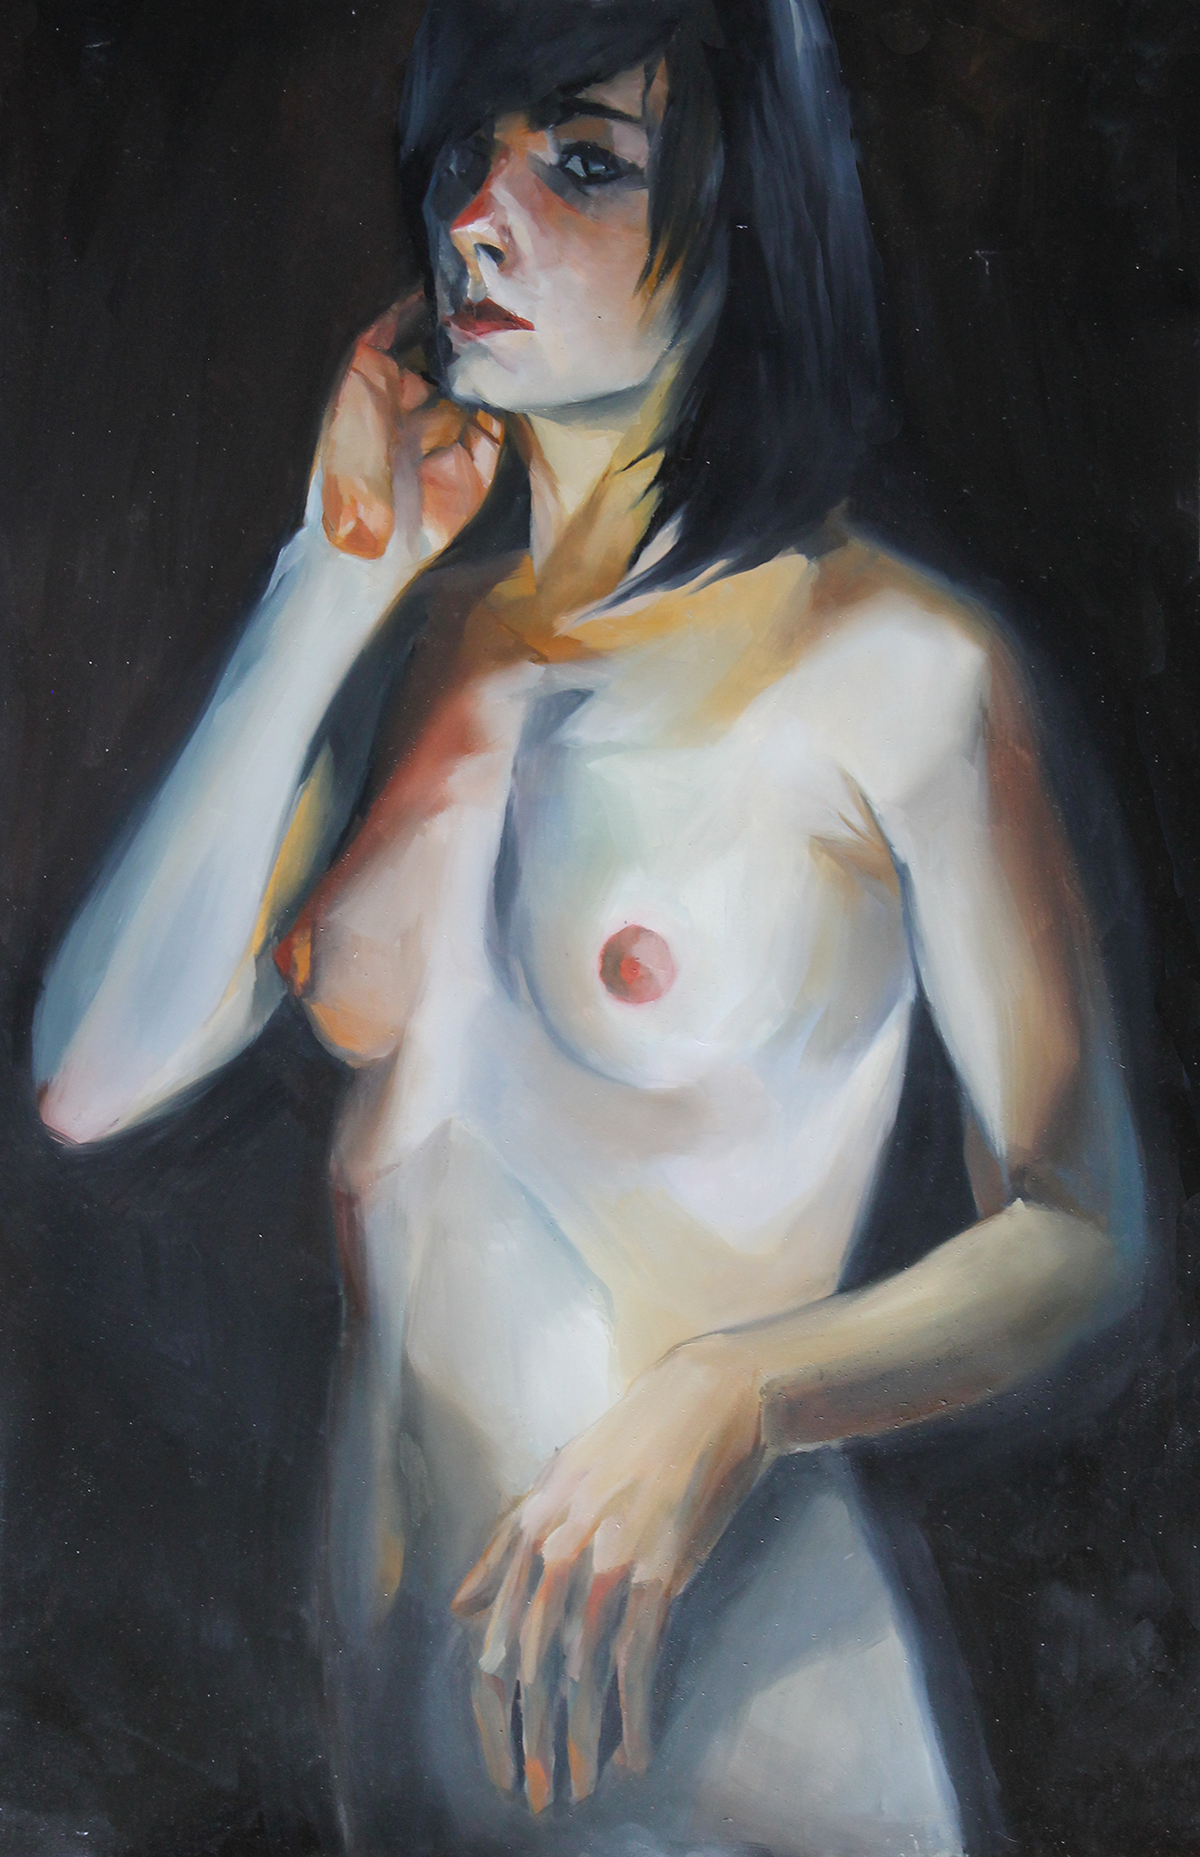 paint oil paint kaiju portrait dallas buyers club nude grapefruit Garlic still life